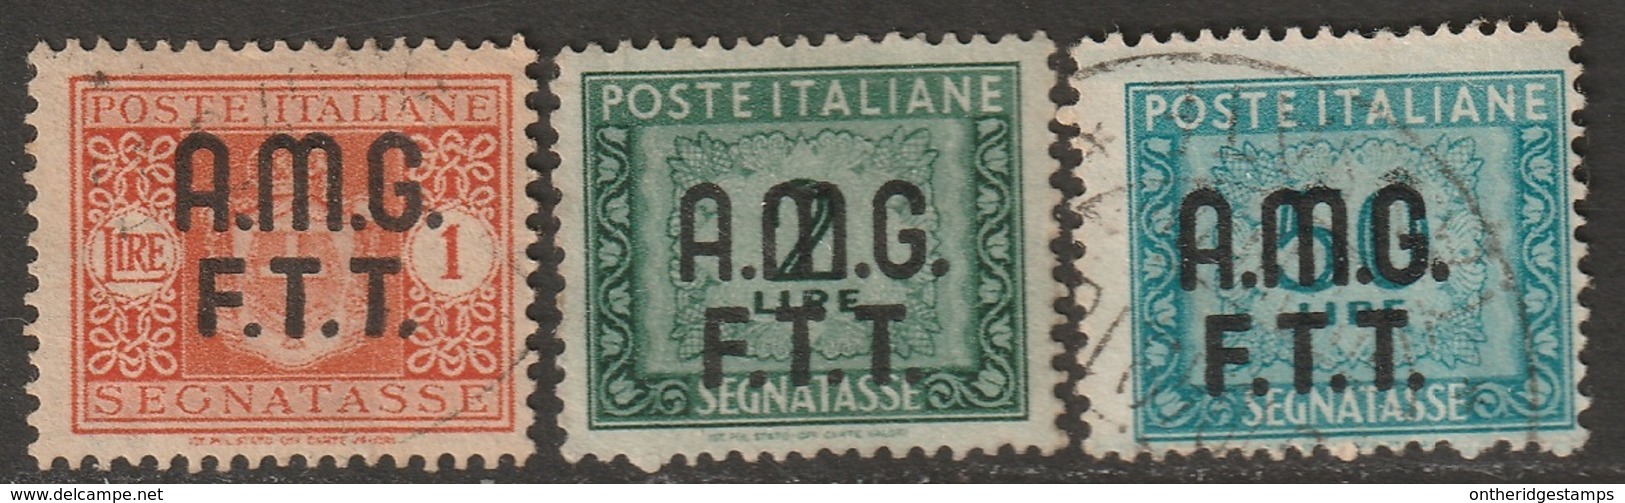 Trieste Zone A 1947 Sc J1-2,J6  Postage Due Used - Postage Due